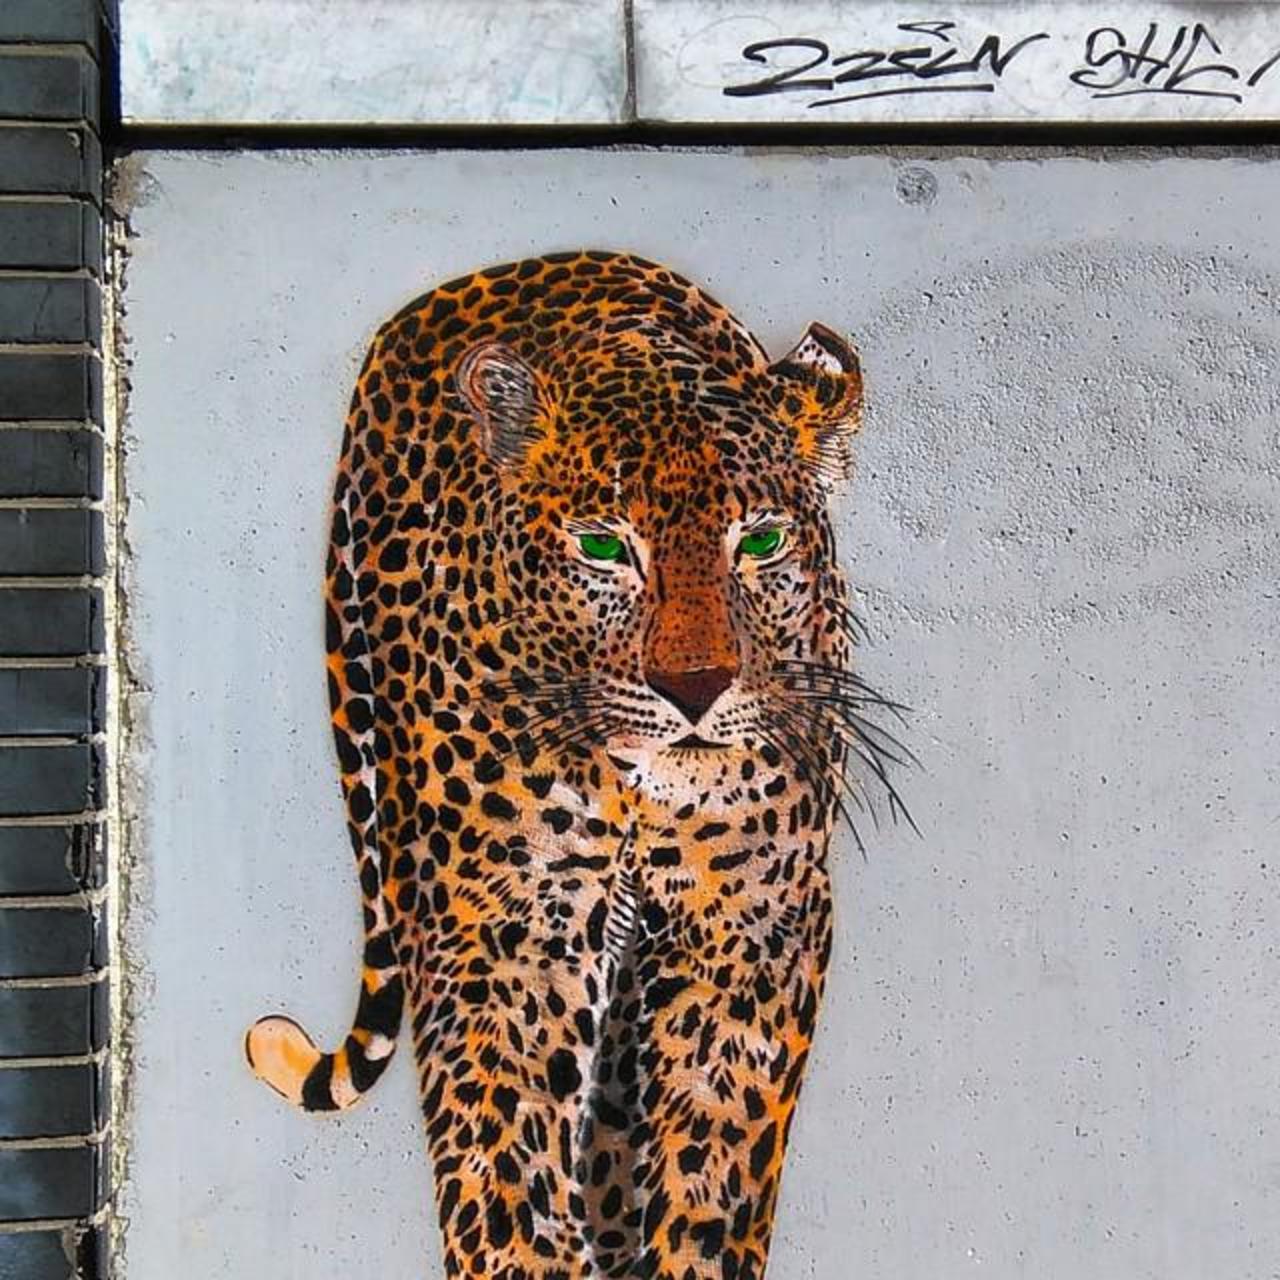 #Paris #graffiti photo by @streetarttourparis http://ift.tt/1jPl0Yv #StreetArt http://t.co/fKKS7wFLlW